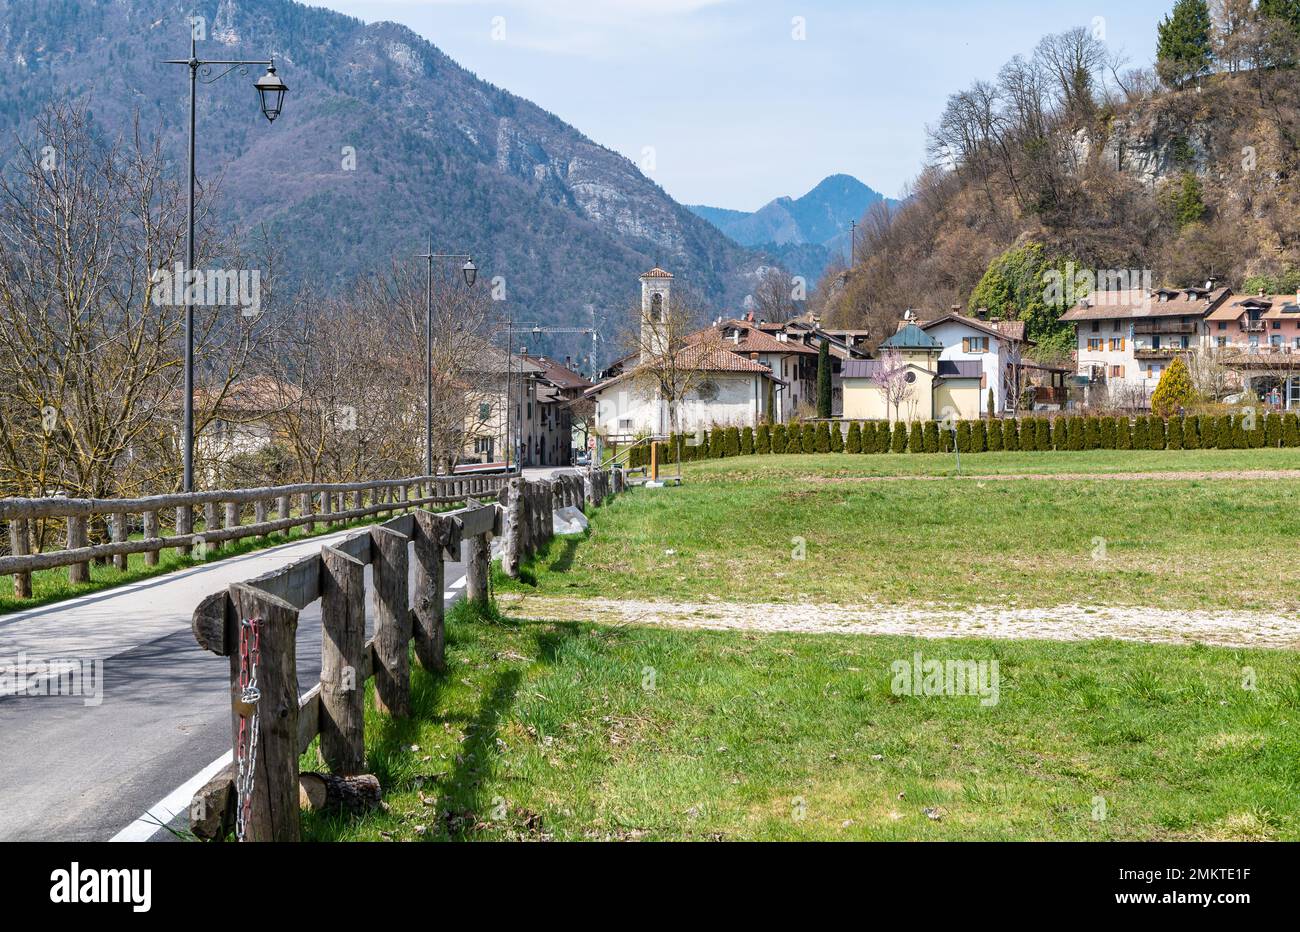 Mezzolago village near Ledro lake in Ledro Valley. Spring landscape. Trento province, Trentino Alto Adige,northern Italy - Europe Stock Photo